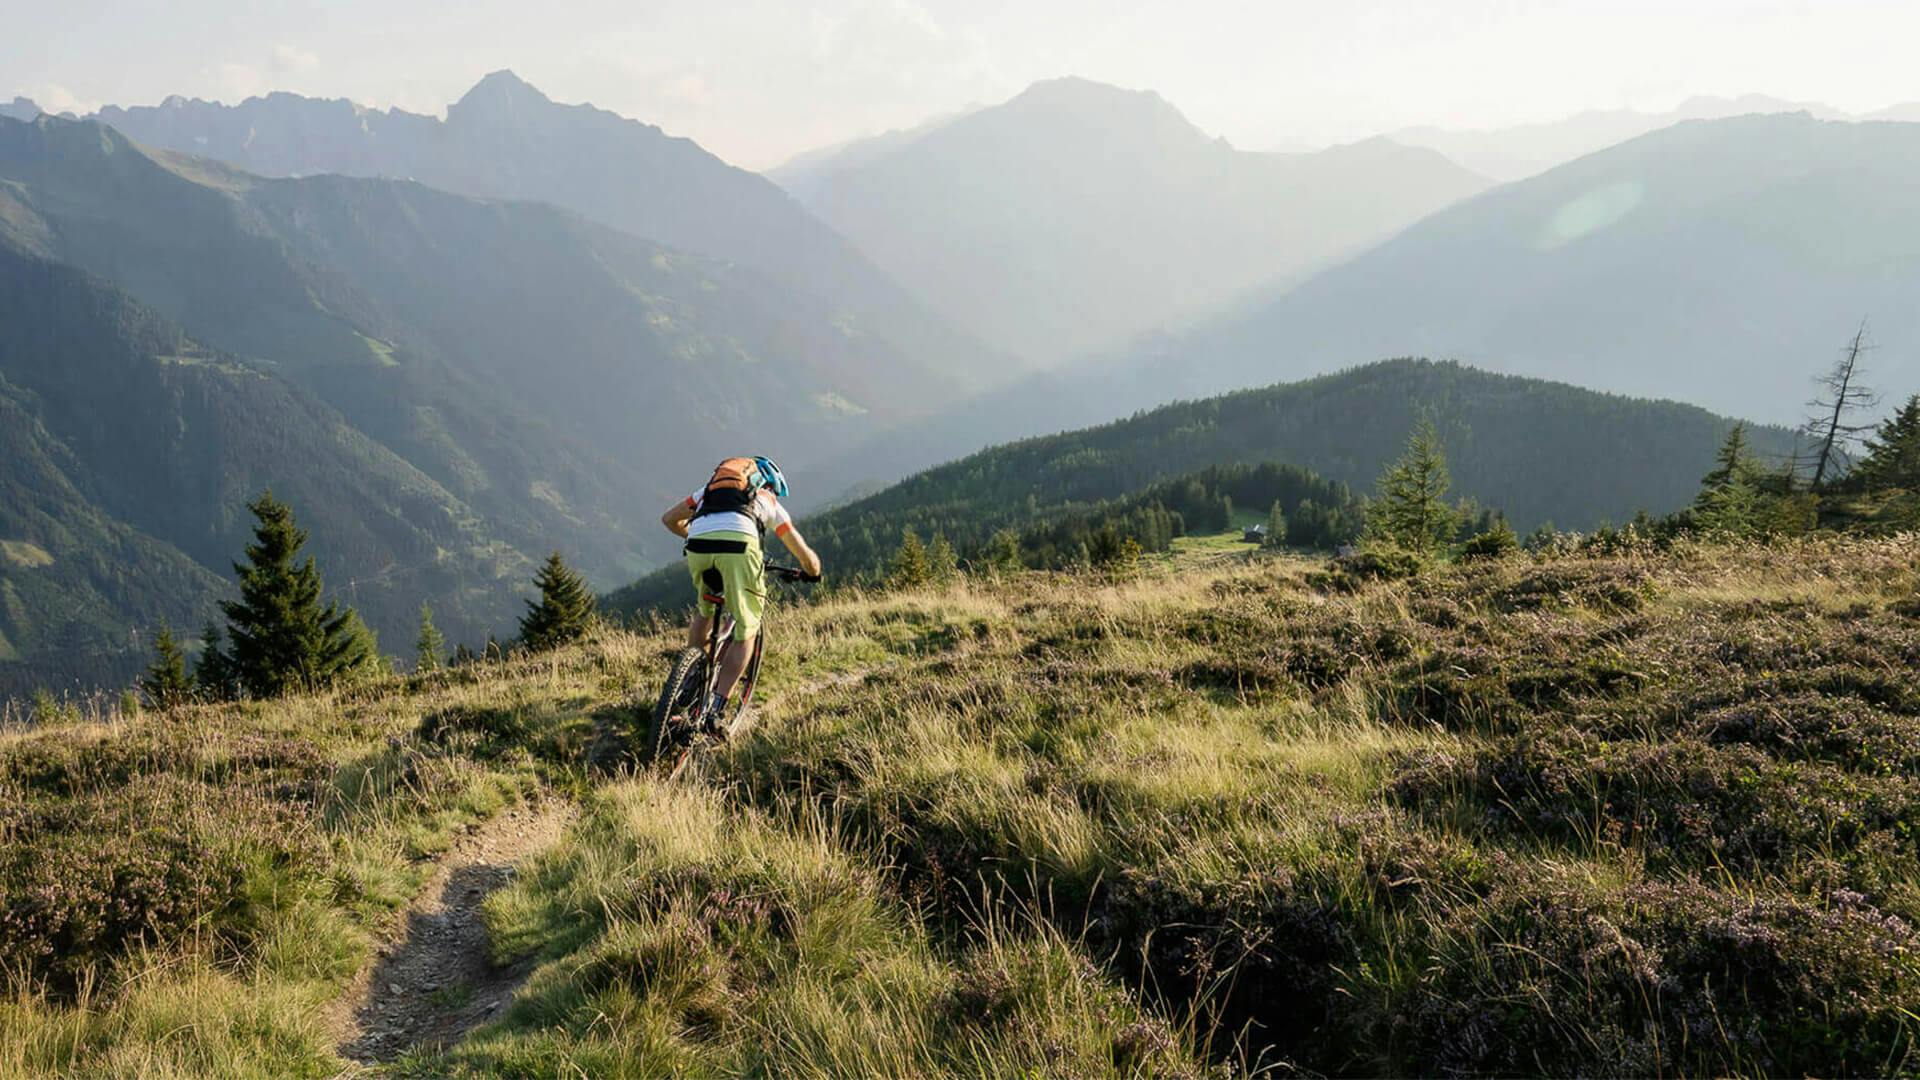 A person riding their bike across a grassy mountain range